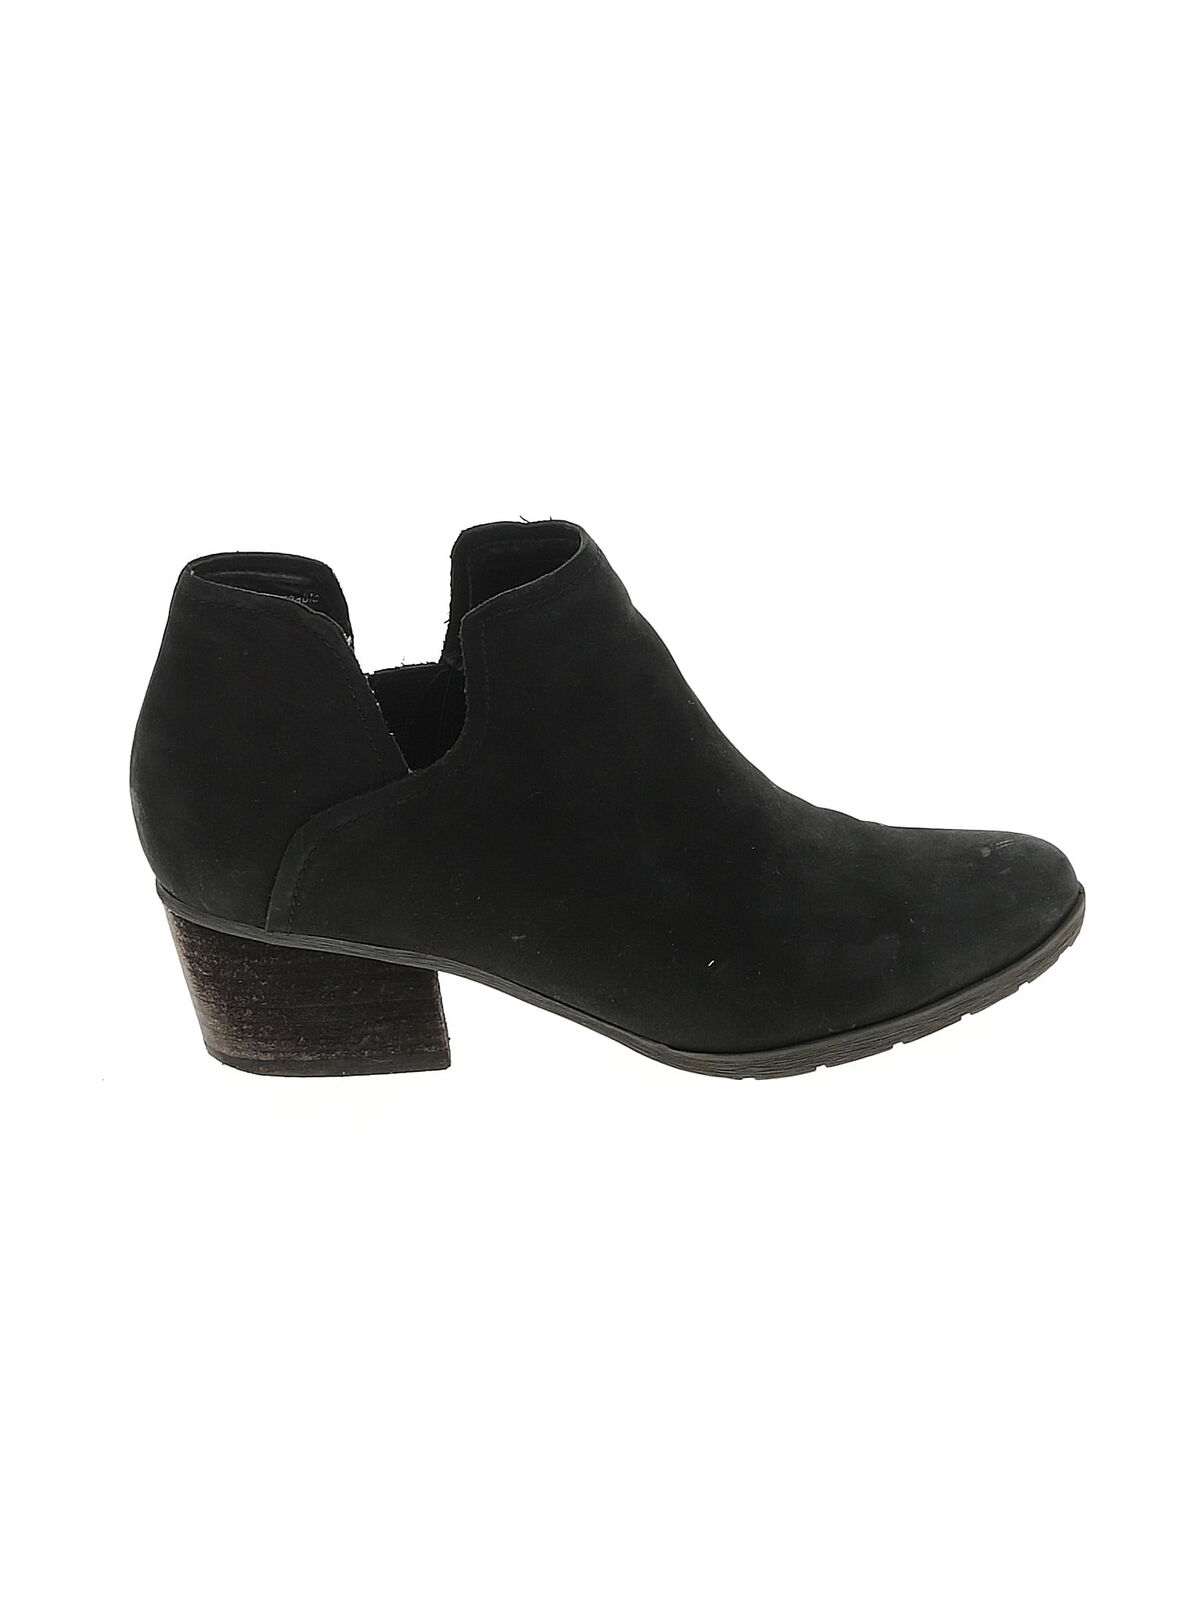 Blondo Women Black Ankle Boots 8.5 - image 1